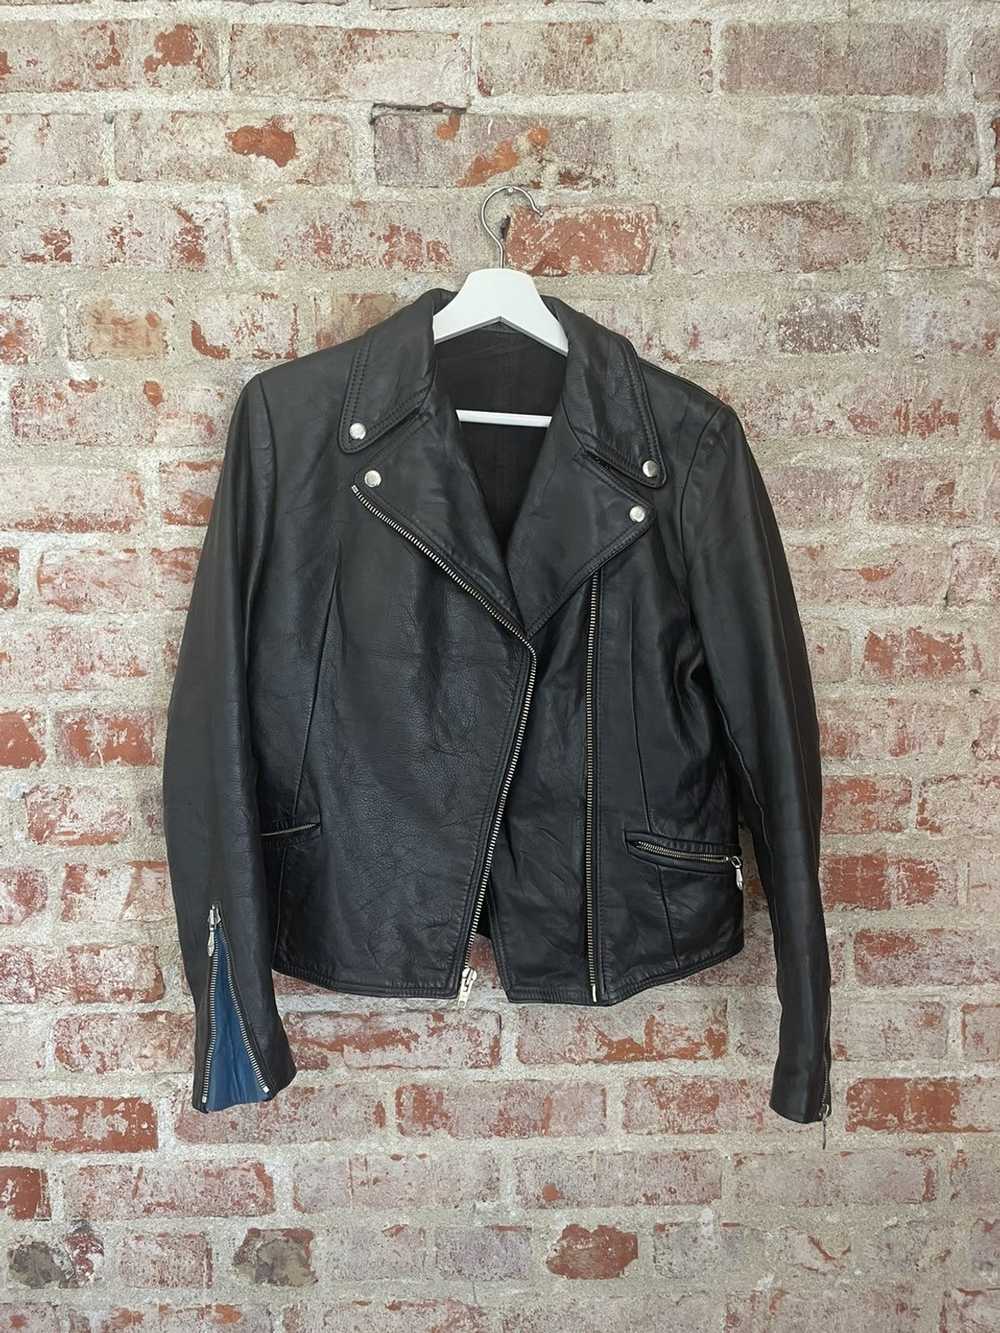 Vintage Vintage 1960s Leather Motorcycle Jacket - image 1